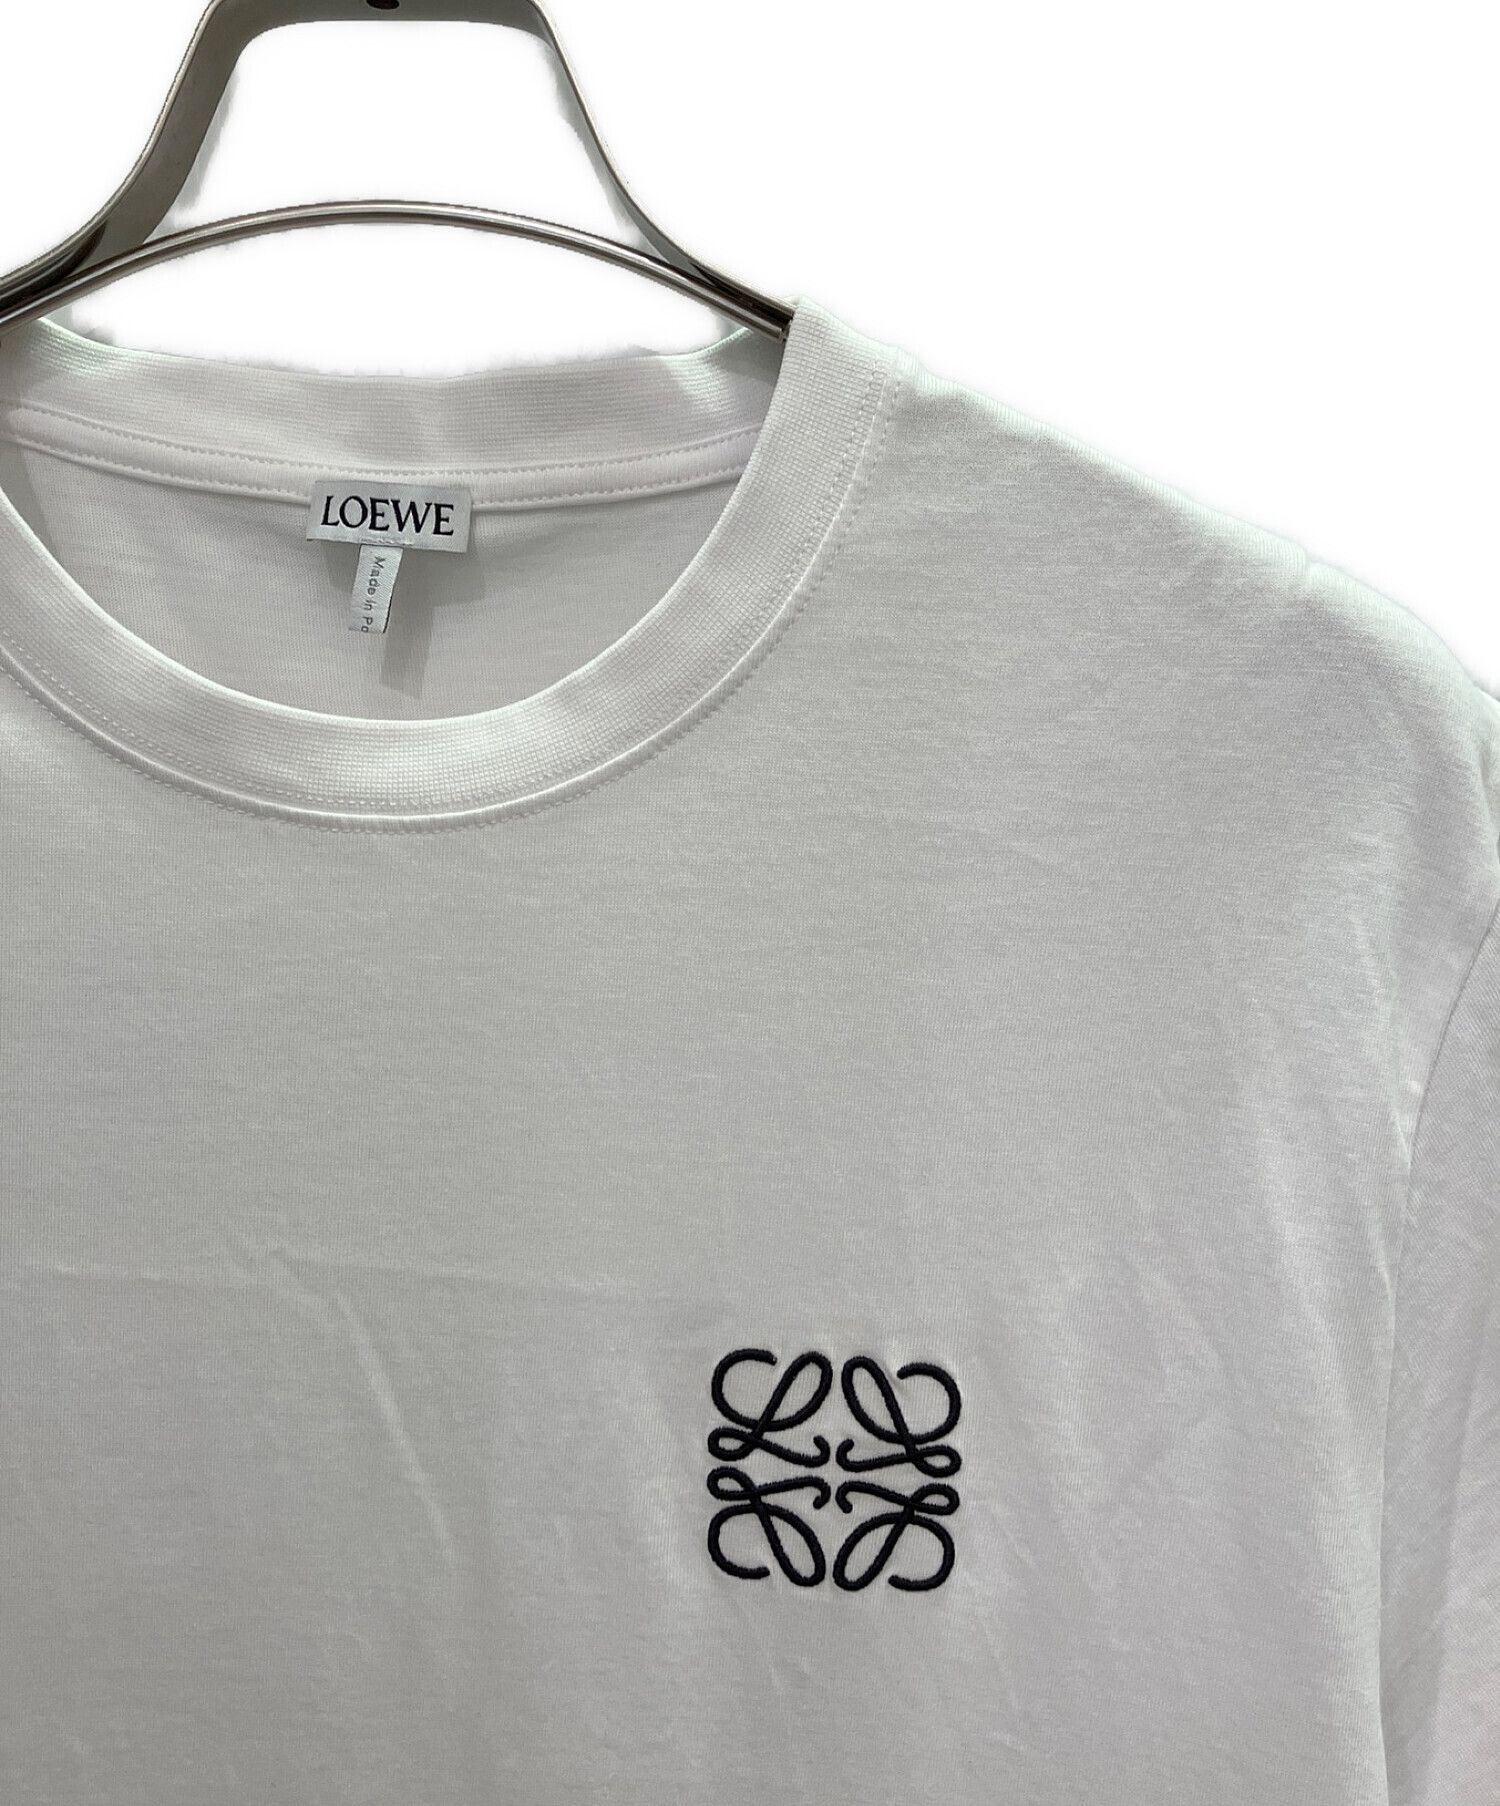 LOEWE (ロエベ) アナグラム刺繍 コットンTシャツ ホワイト サイズ:S